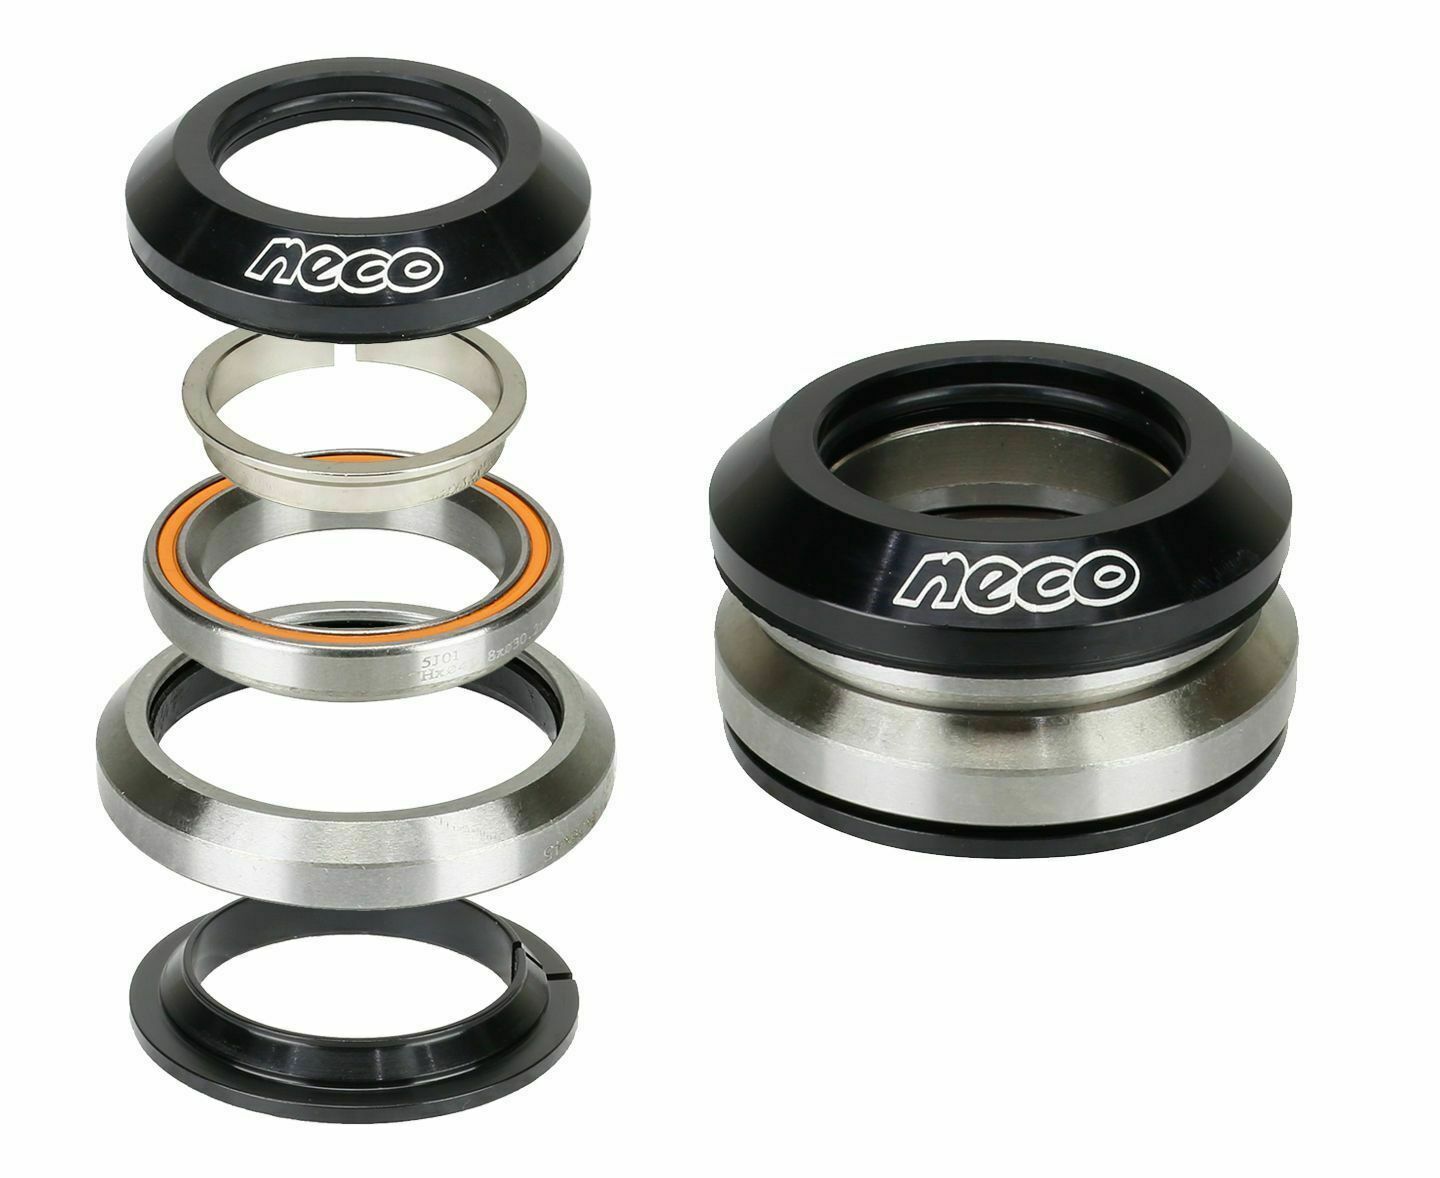 NECO Bike CNC Taper Headset 1-1/8" 1-1/4" Bearing